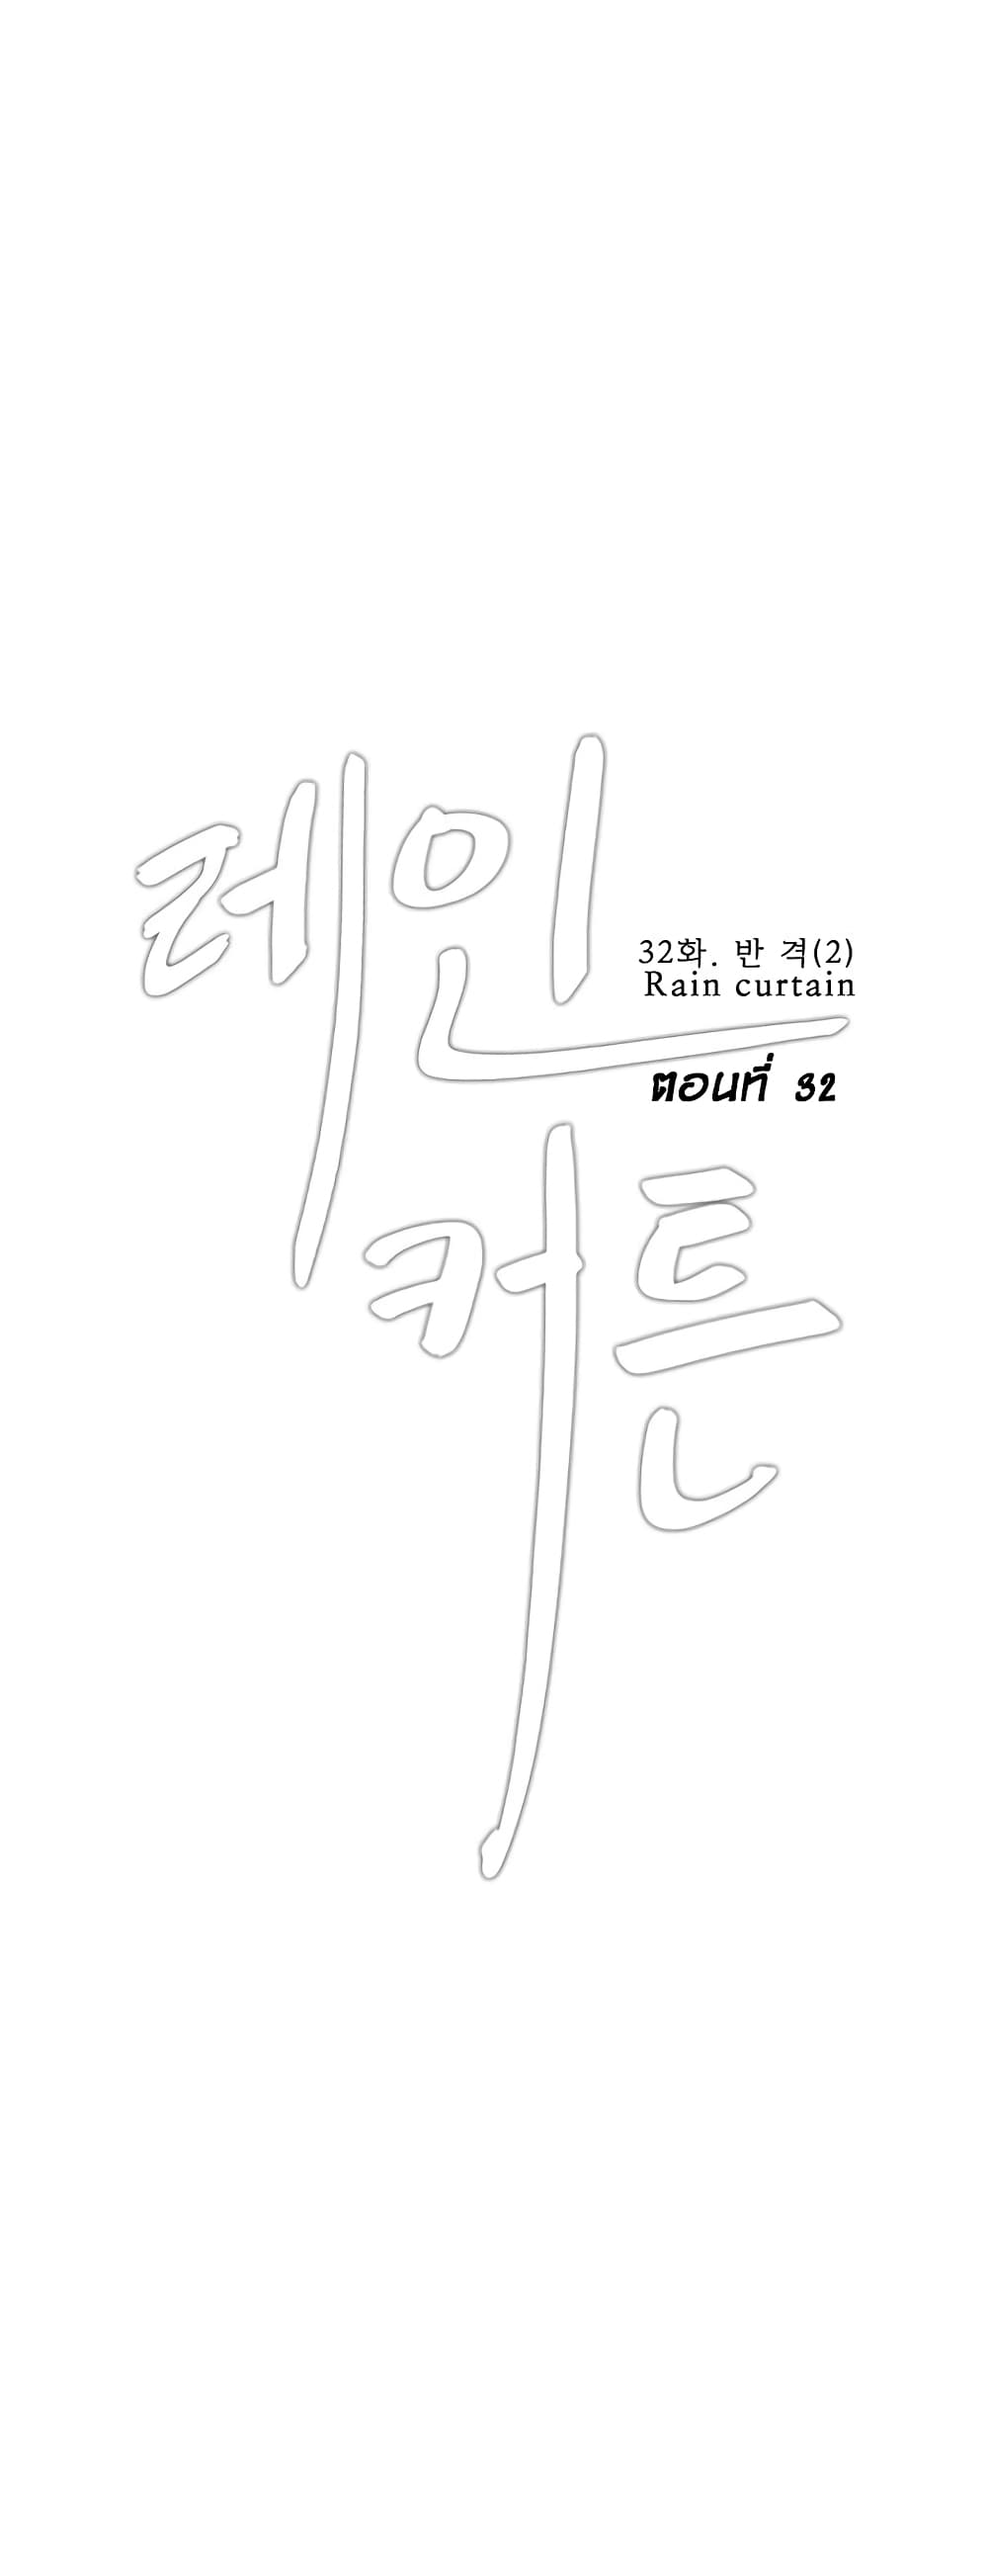 Rain Curtain 32 (1)